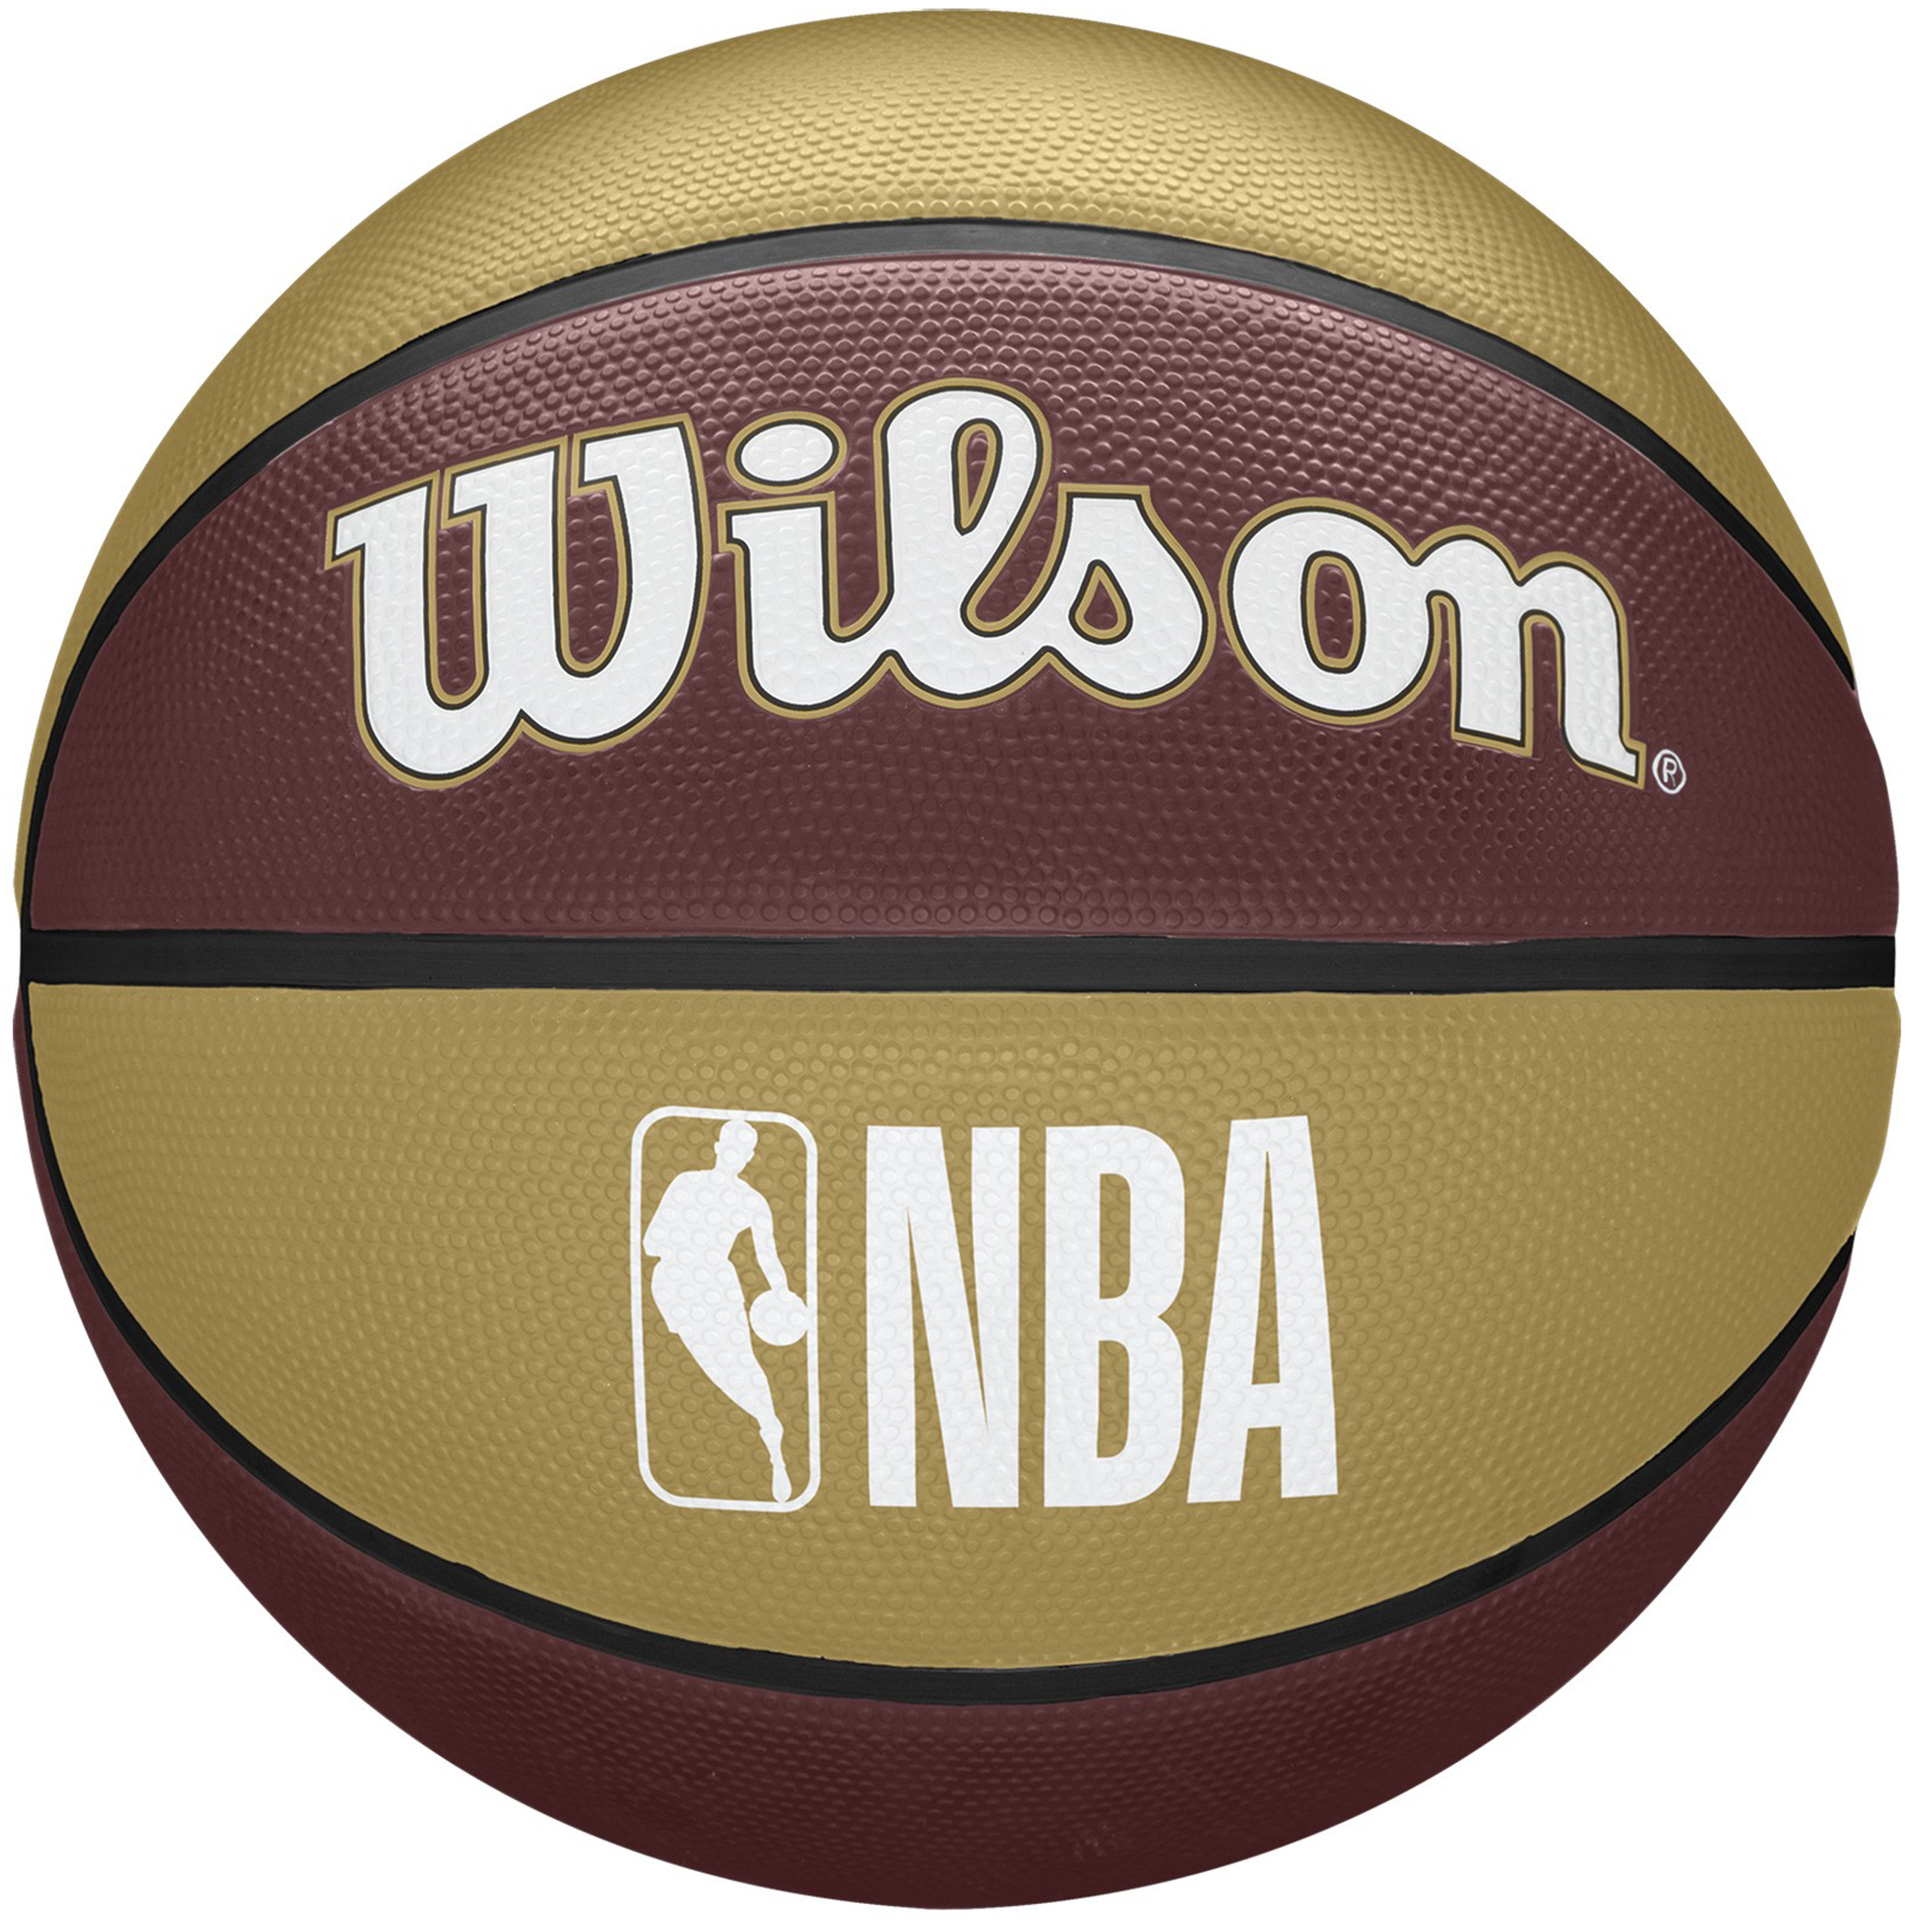 BALON BALONCESTO WILSON NBA TEAM TRIBUTE CAVALIERS